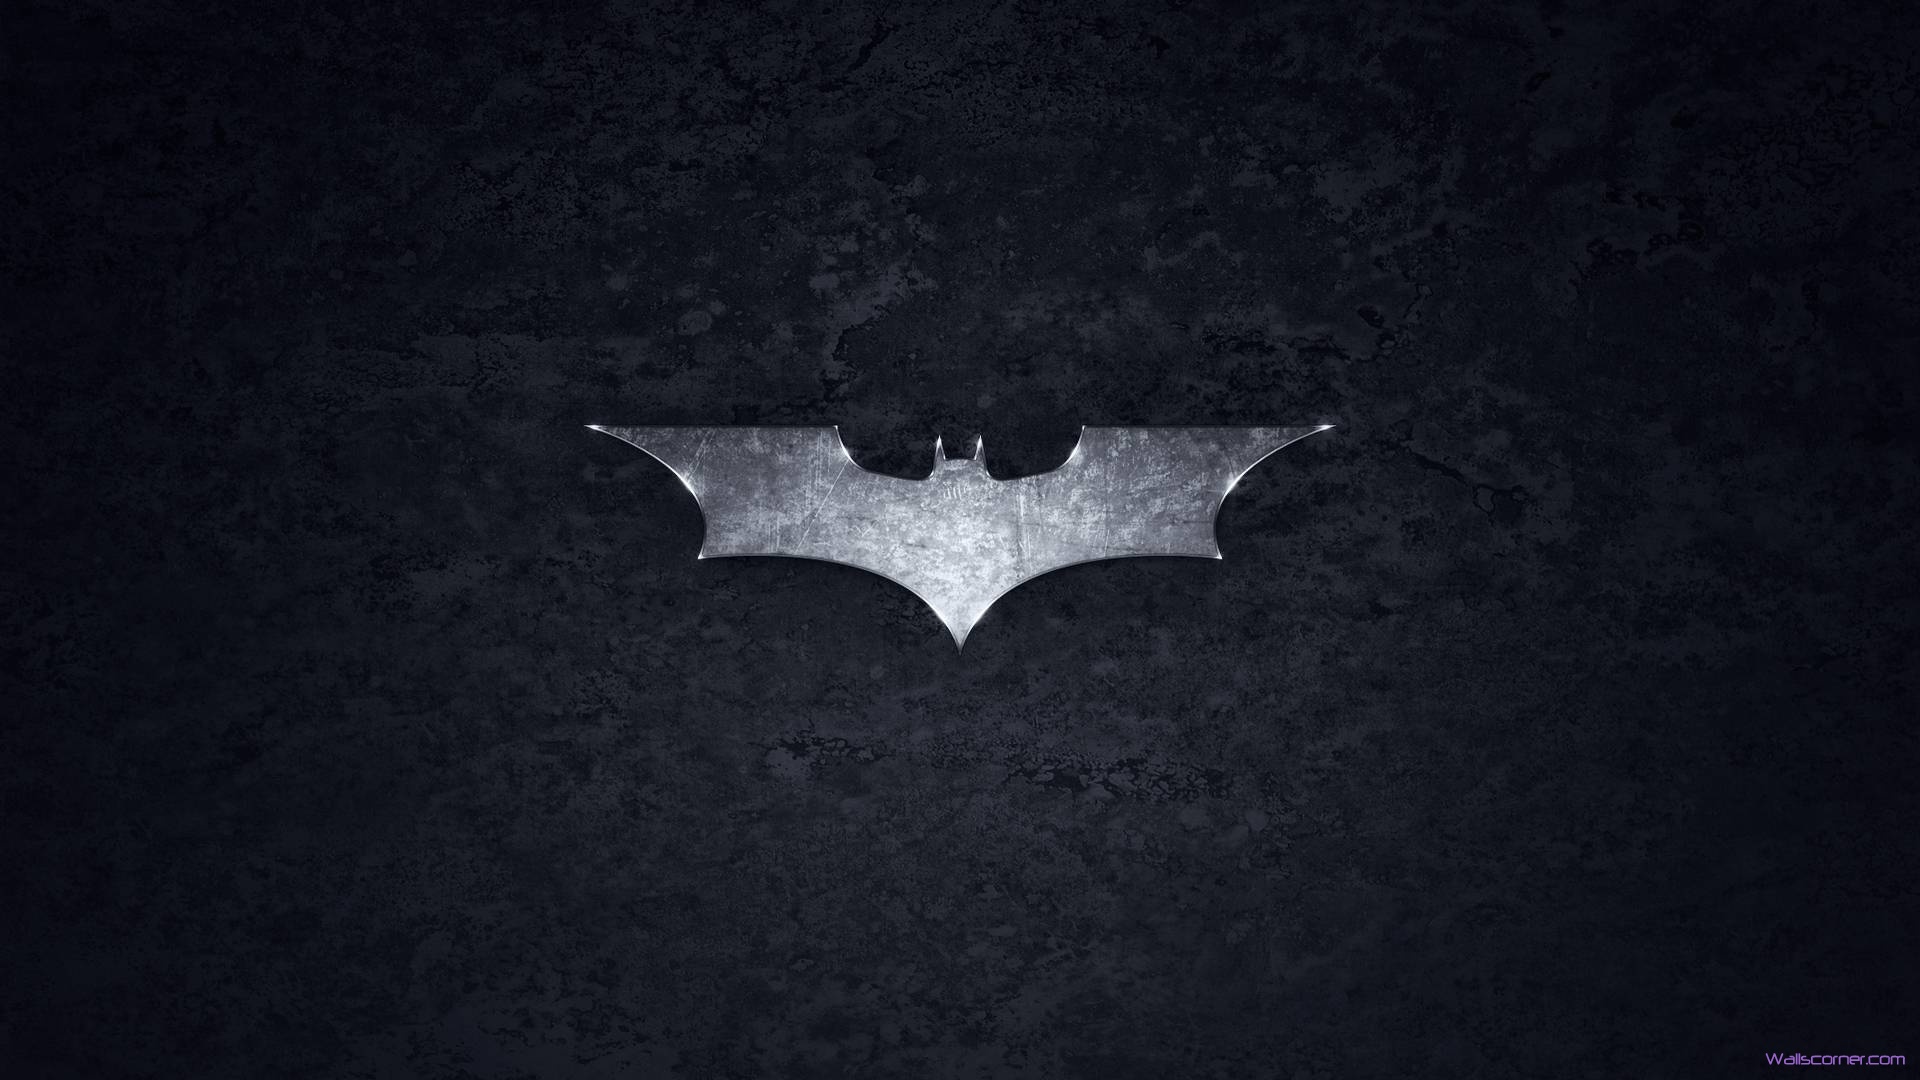 Batman Logo Wallpaper HD In Logos Imageci